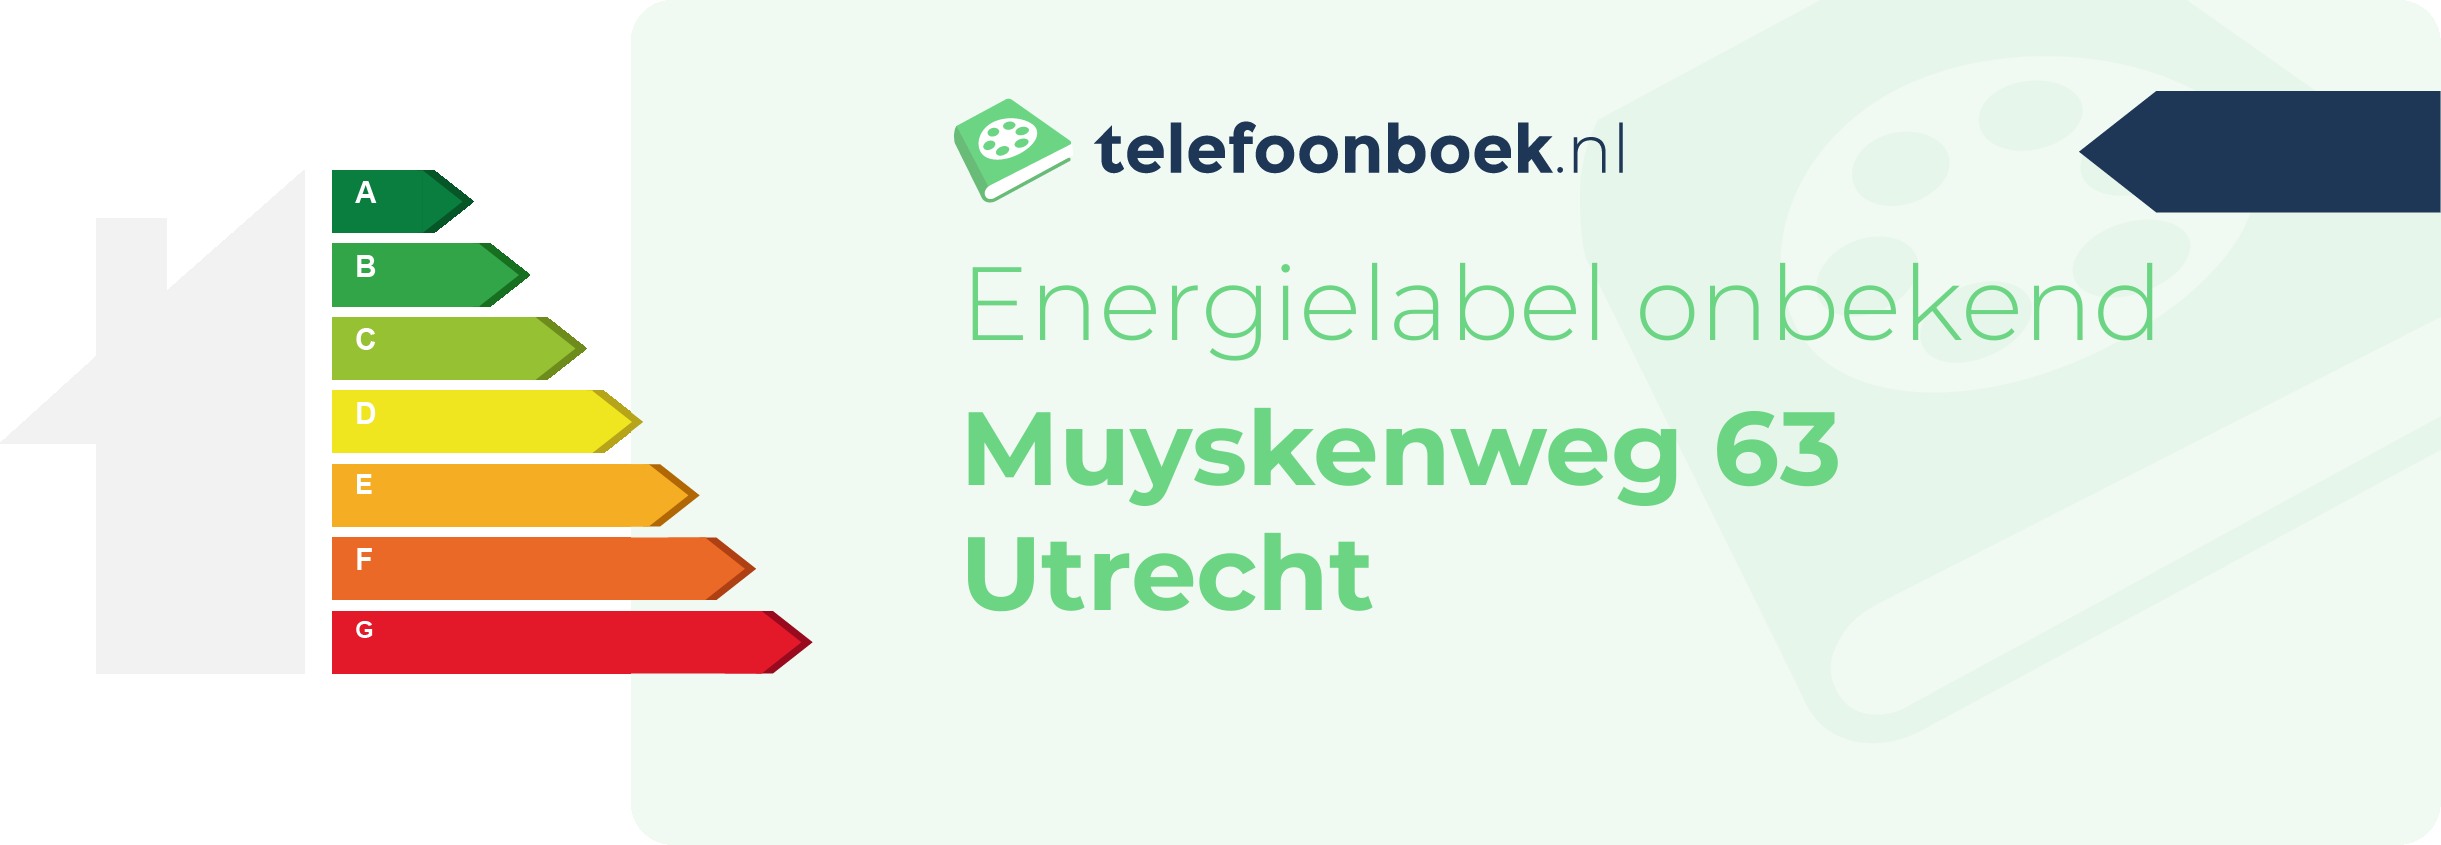 Energielabel Muyskenweg 63 Utrecht